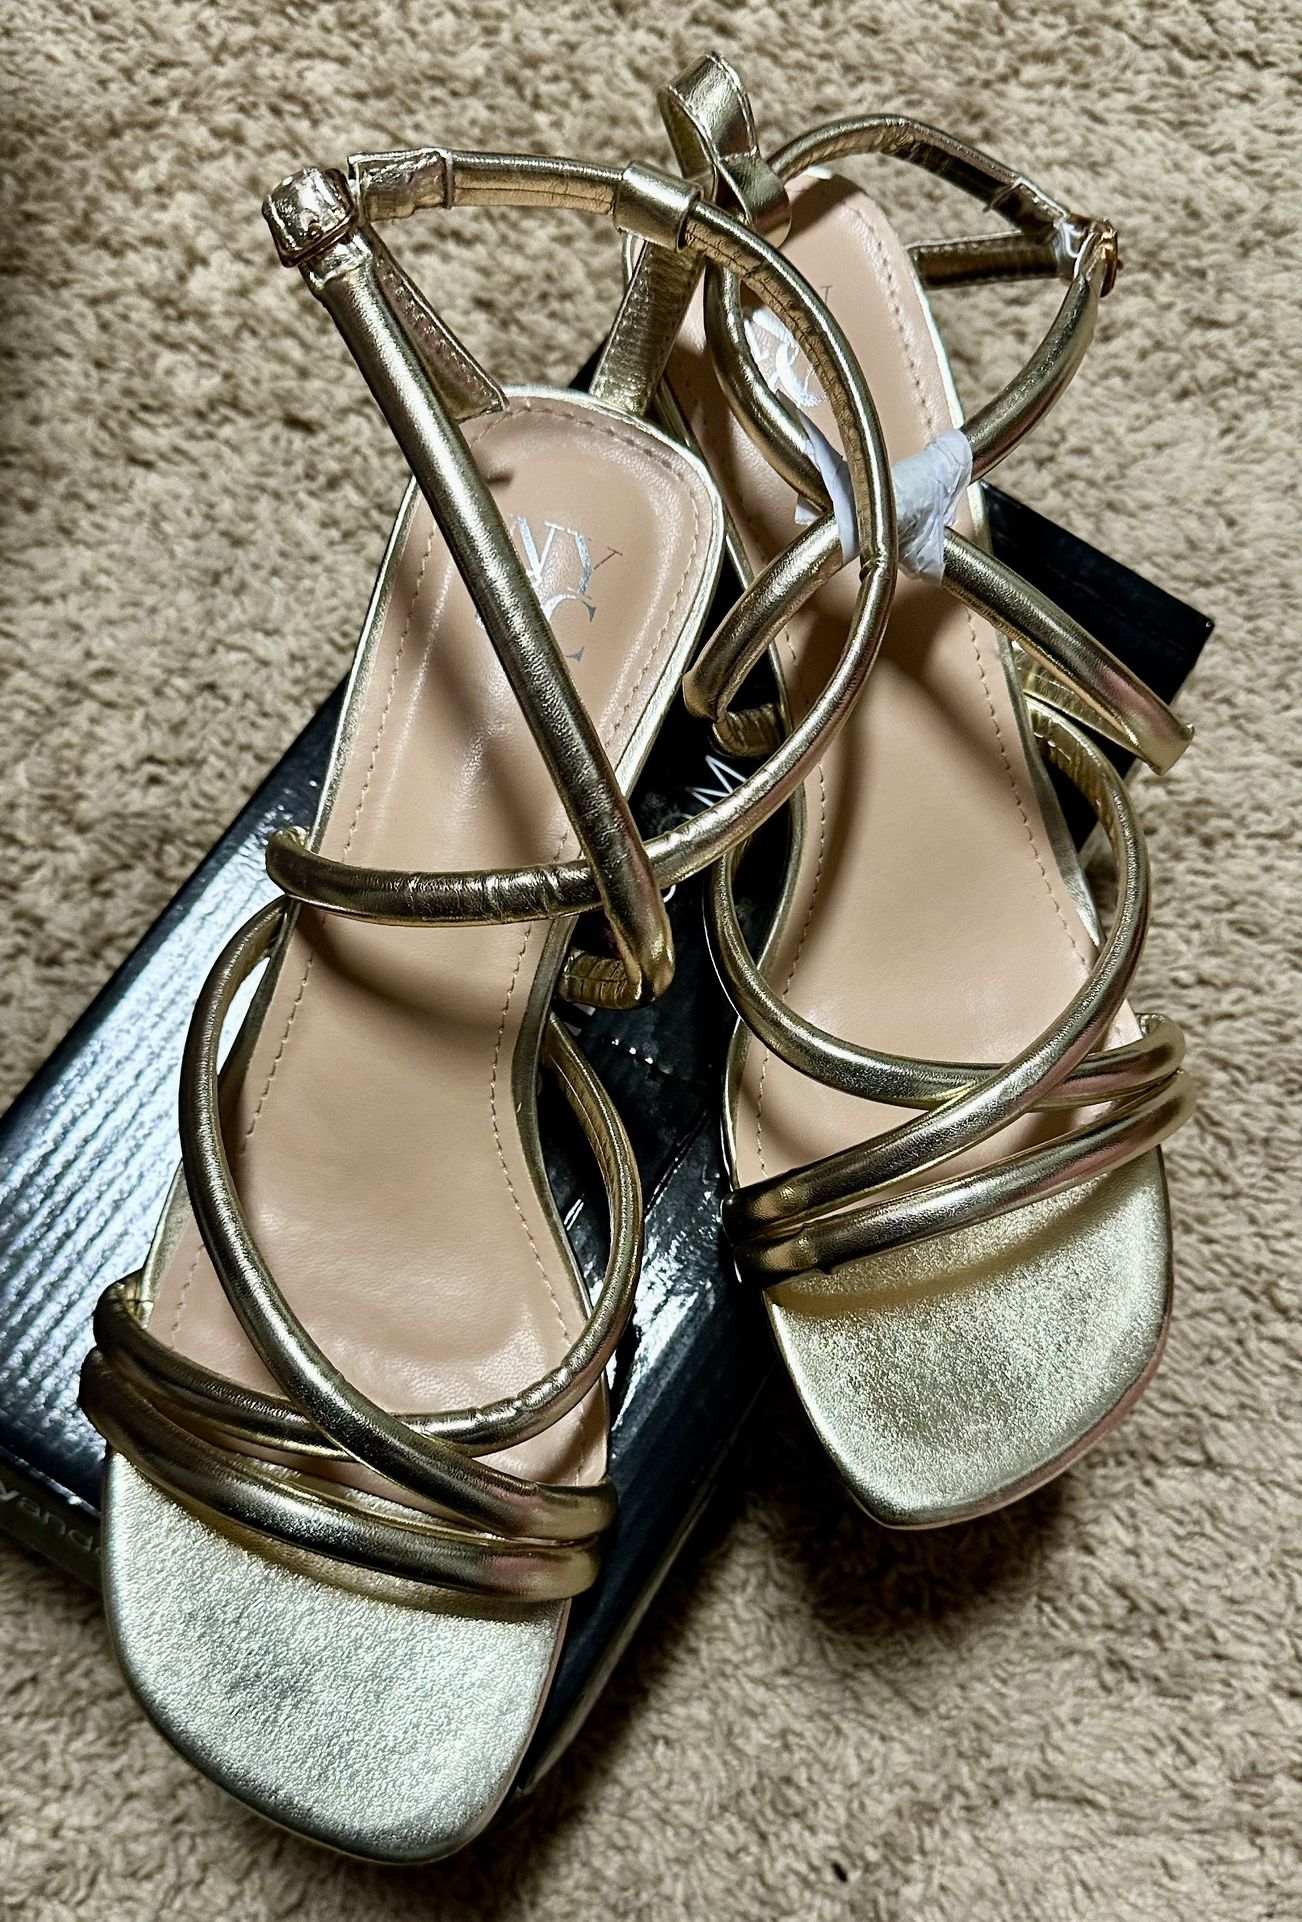 Women’s size 10 gold strap sandals